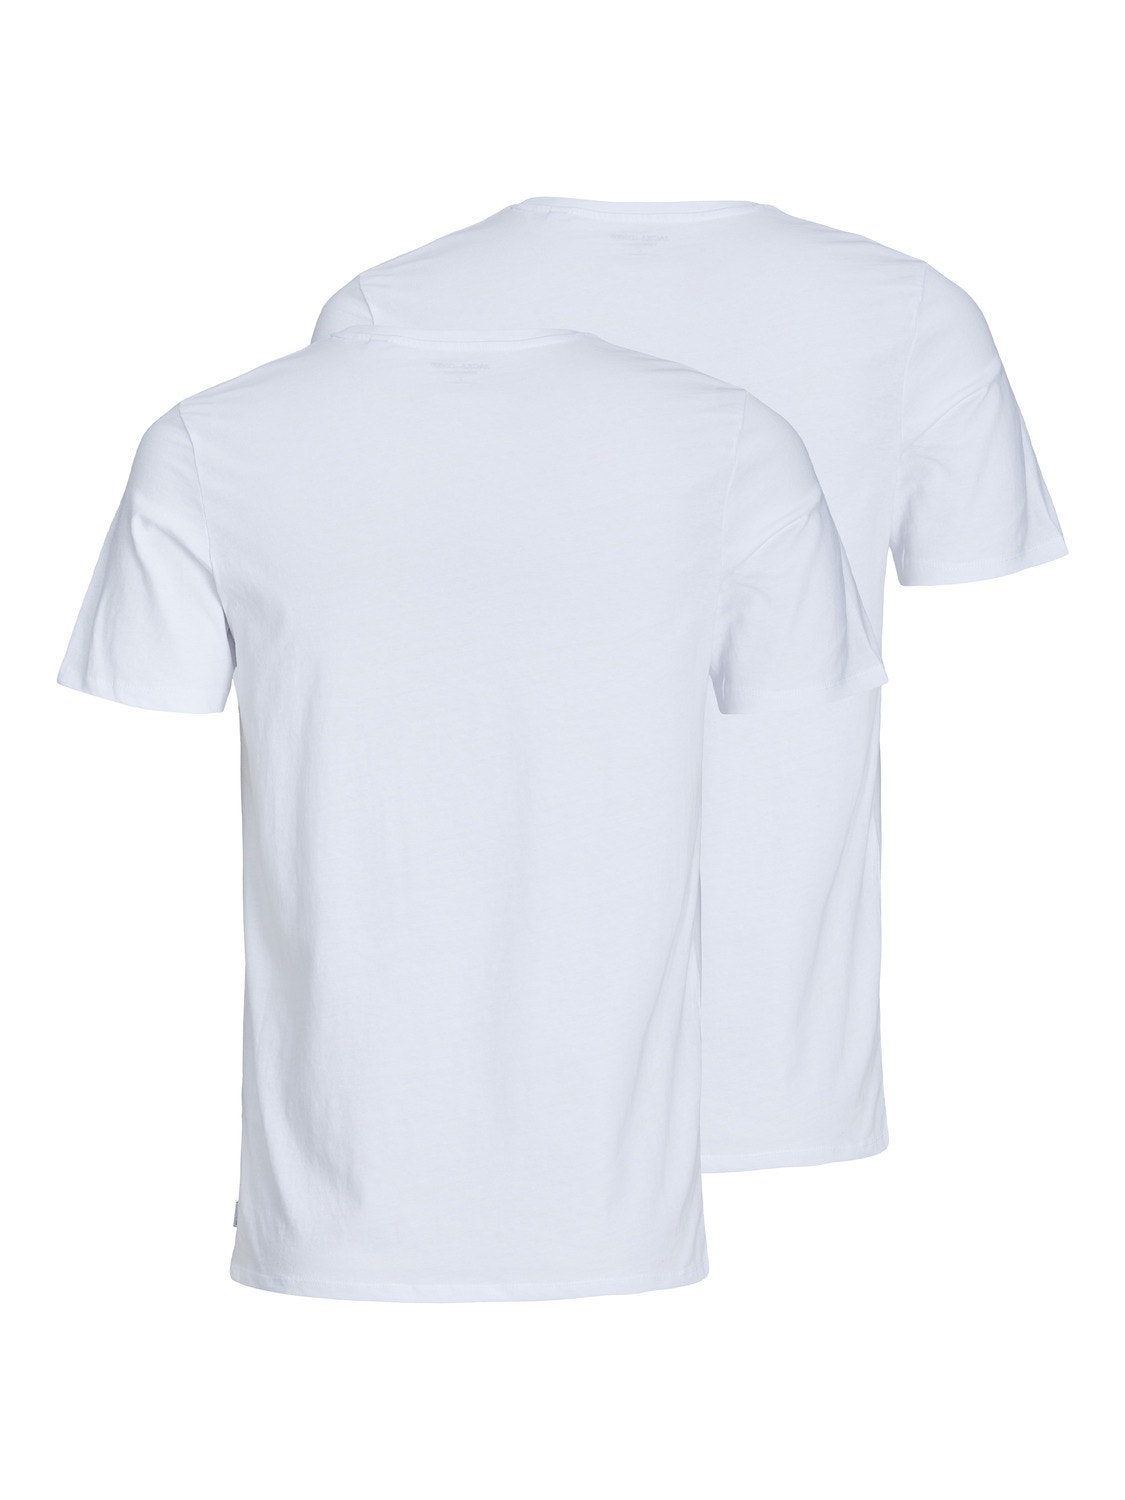 Jack & Jones 2-pack Plain Crew neck T-shirt -White - 12133913